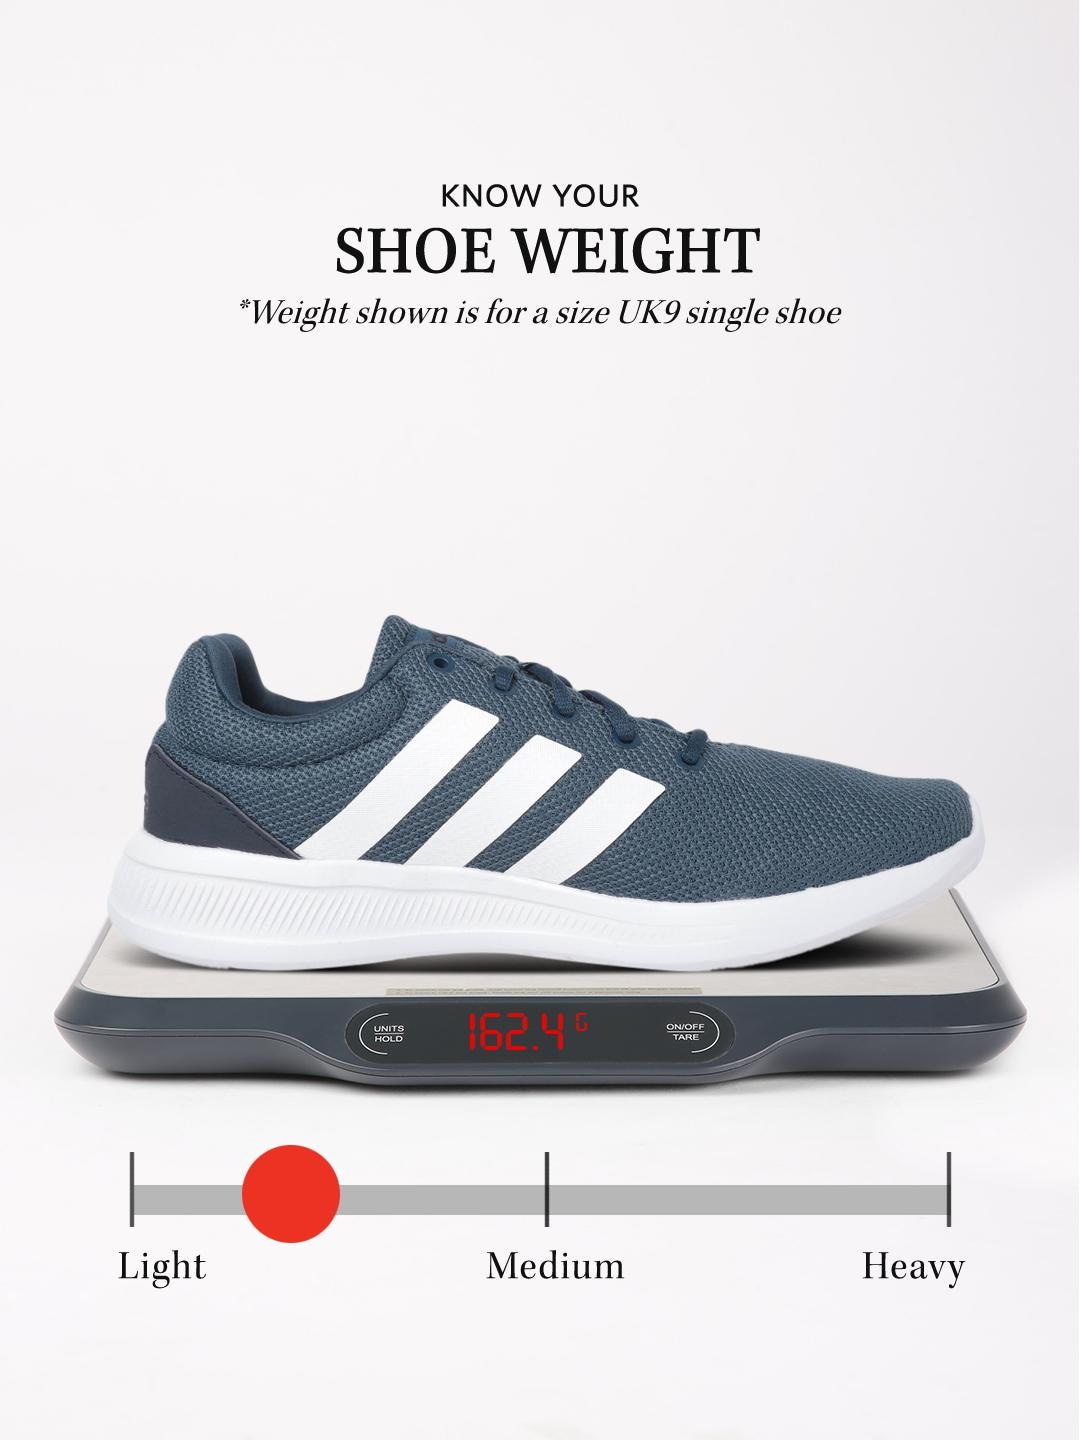 Adidas Mens Lite Racer CLN 2.0 Shoes is just 162.4 gram